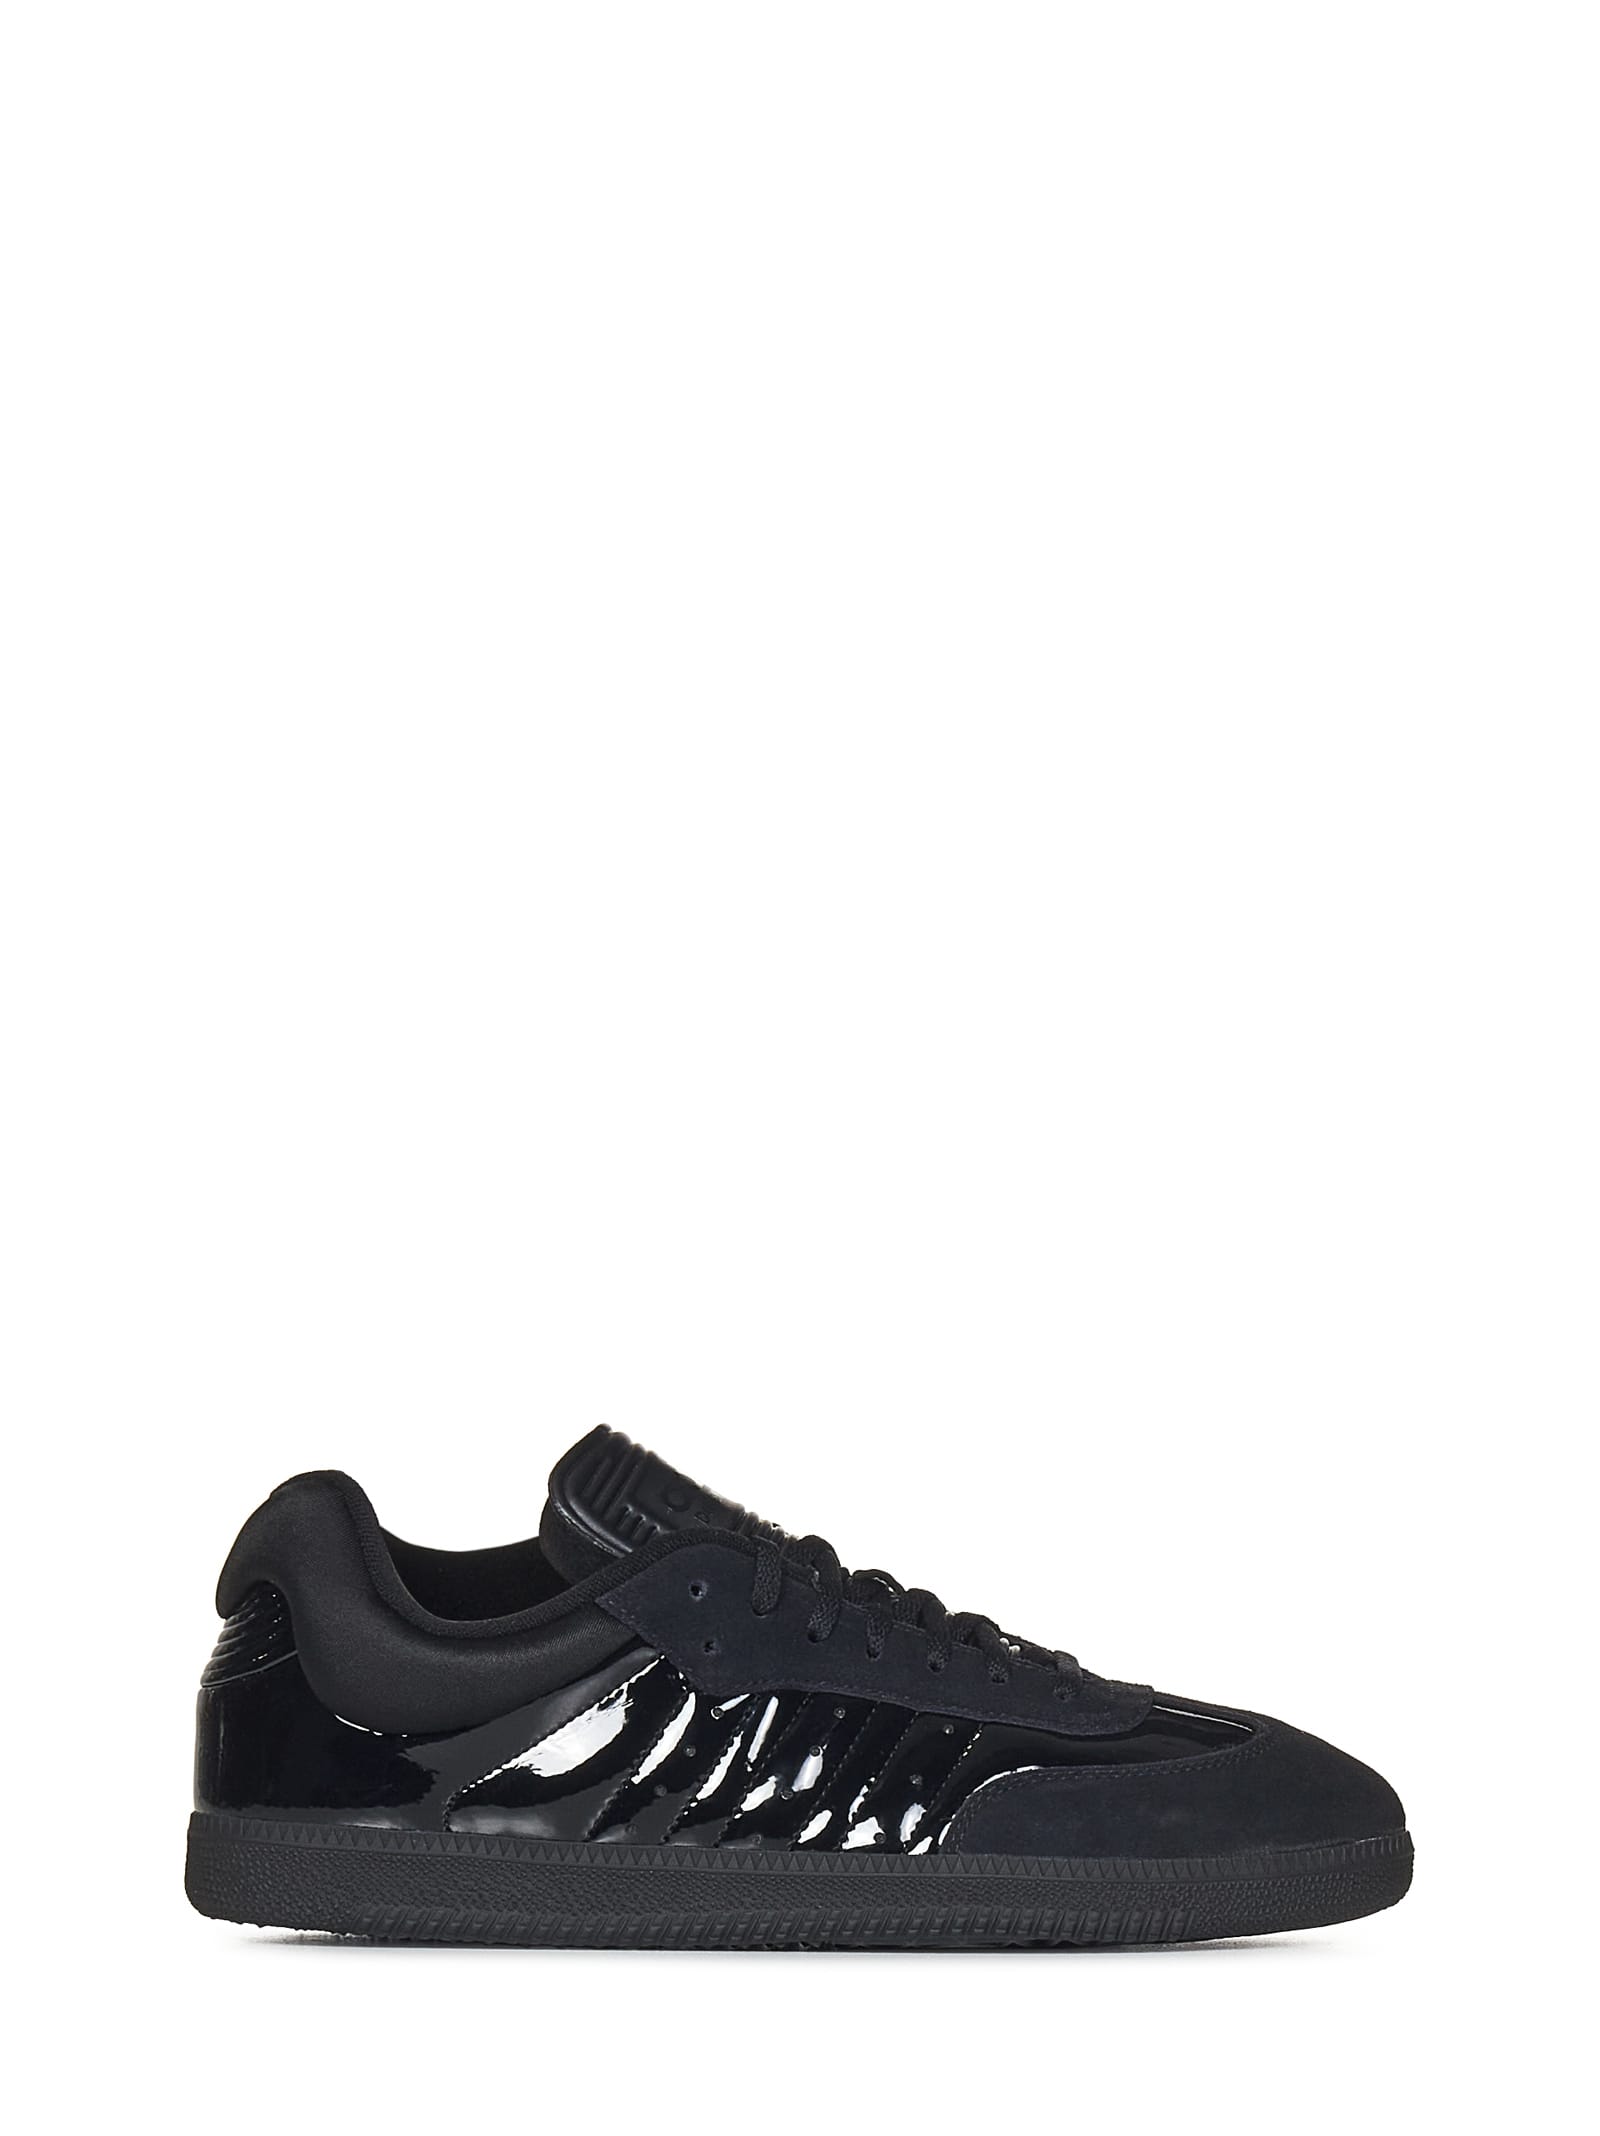 Adidas By Stella Mccartney Samba Dingyun Zhang Sneakers In Black